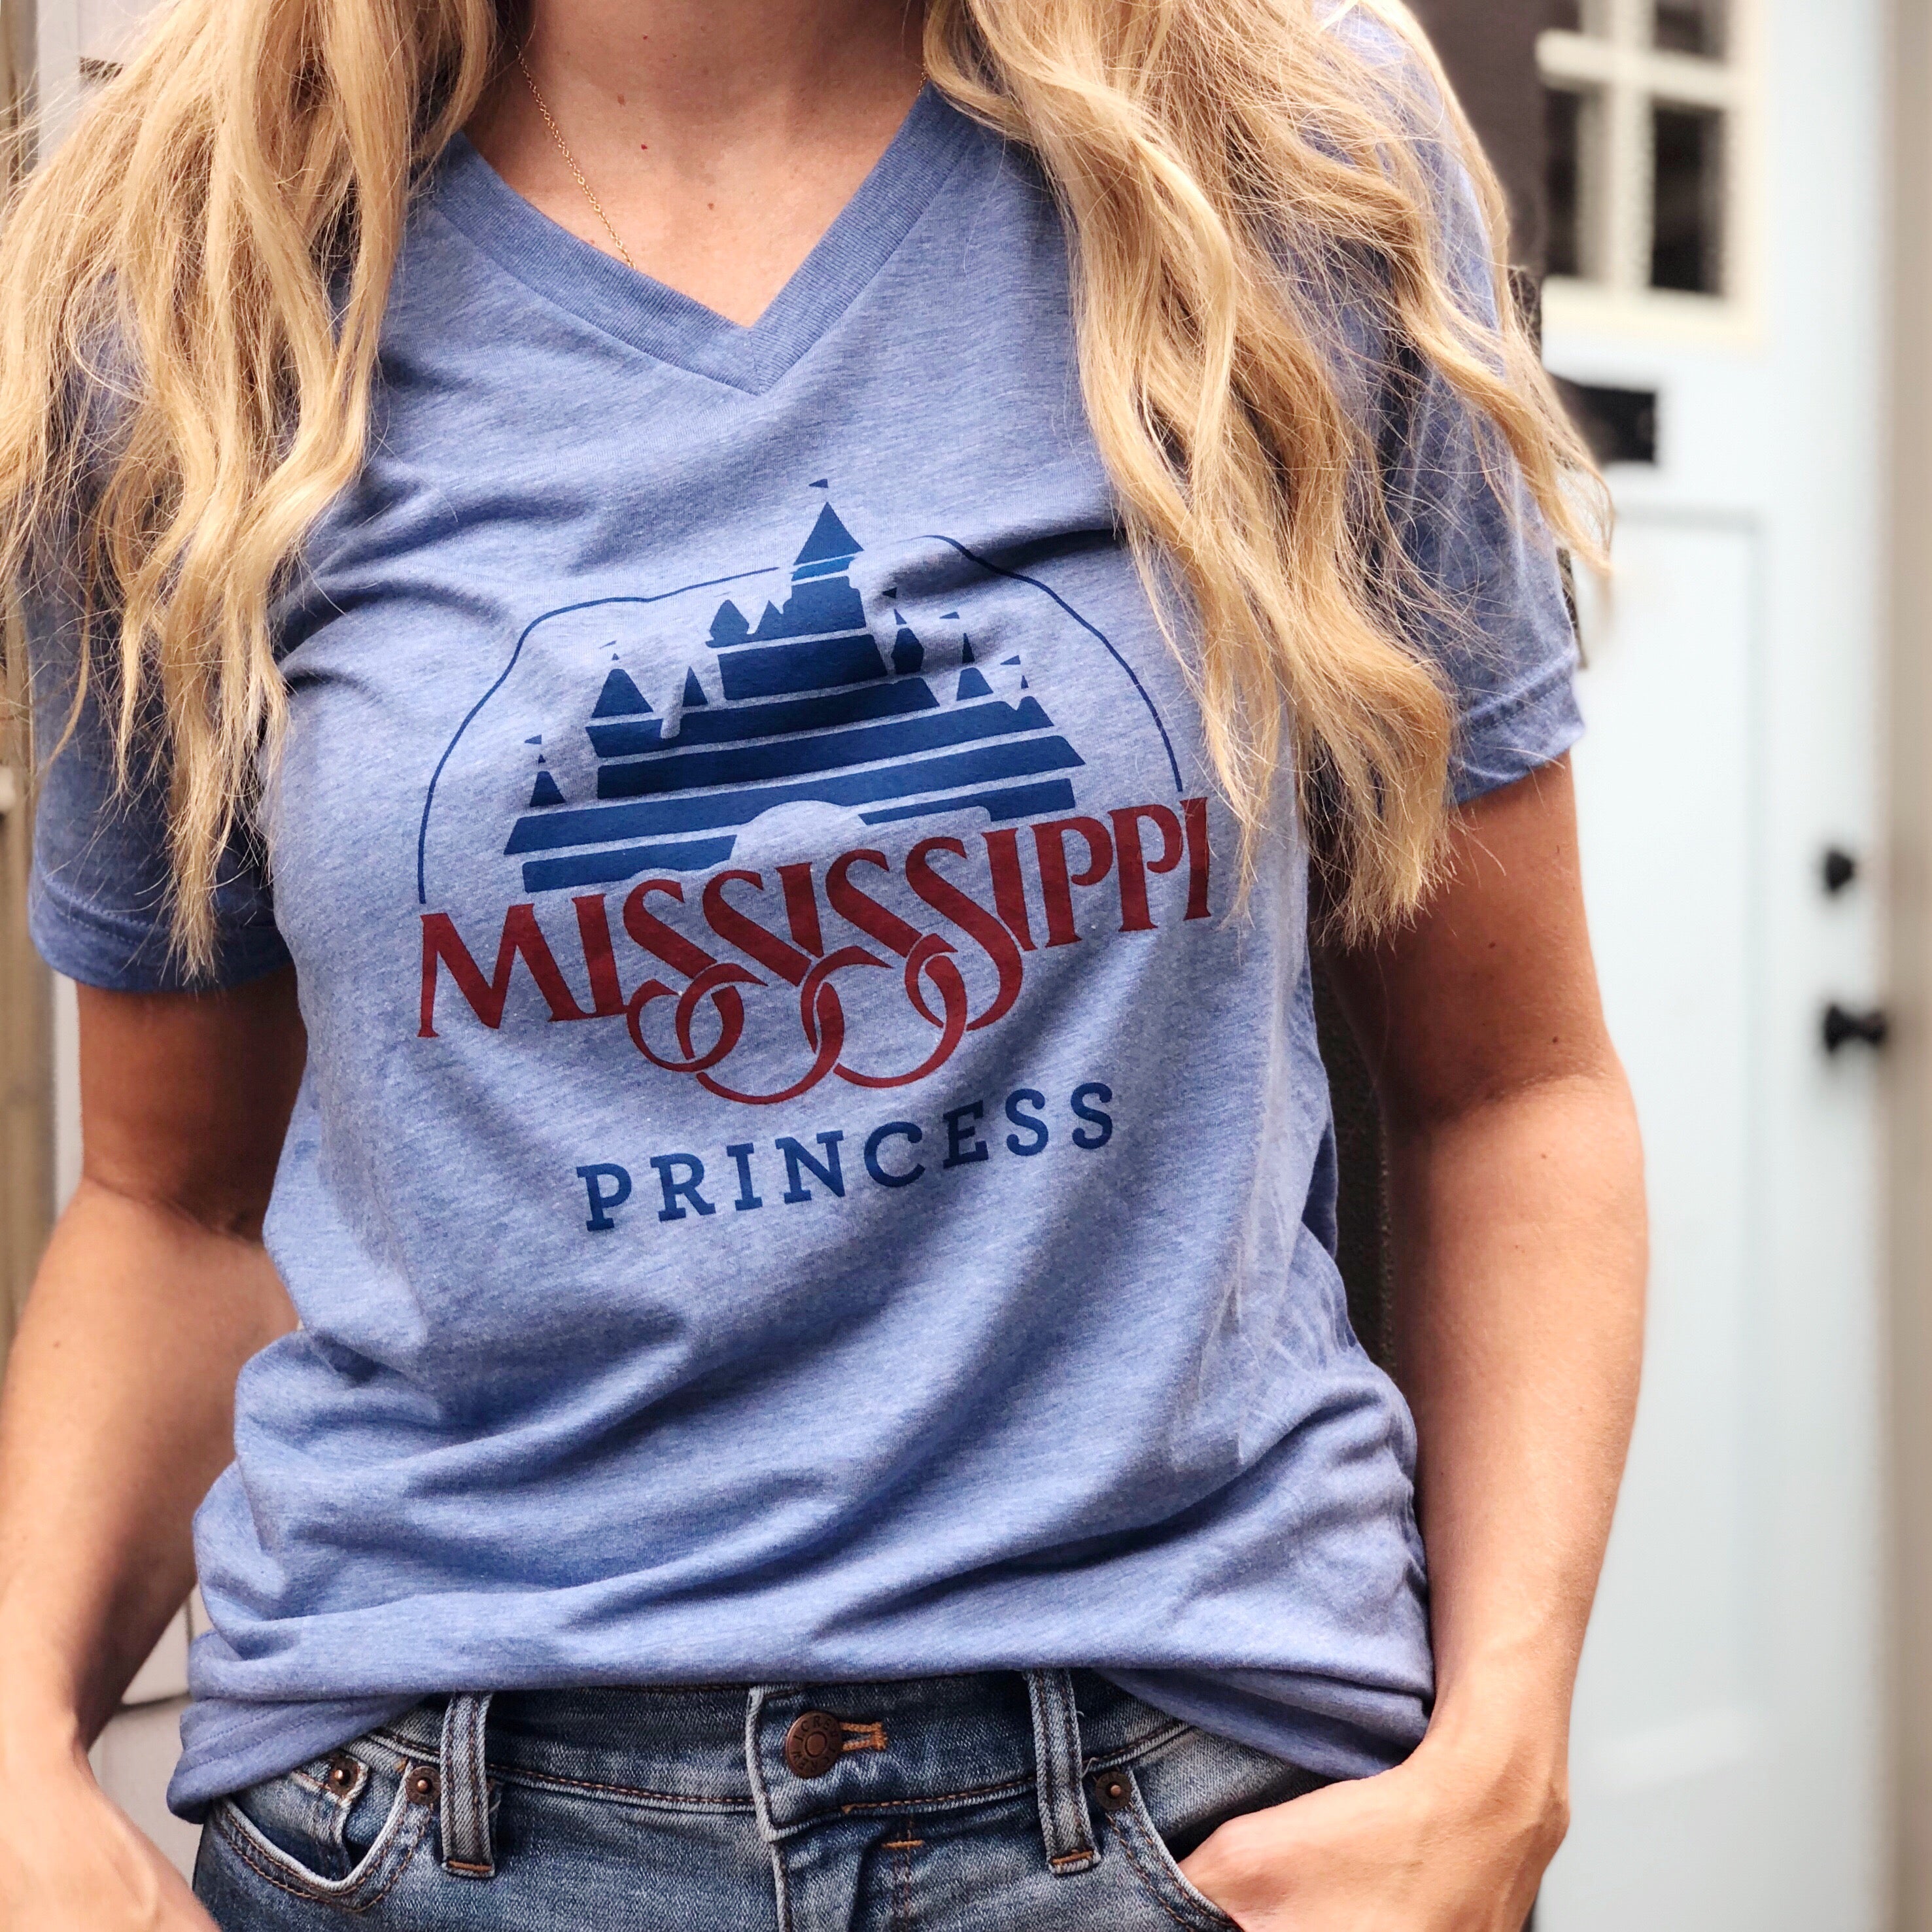 Mississippi Princess